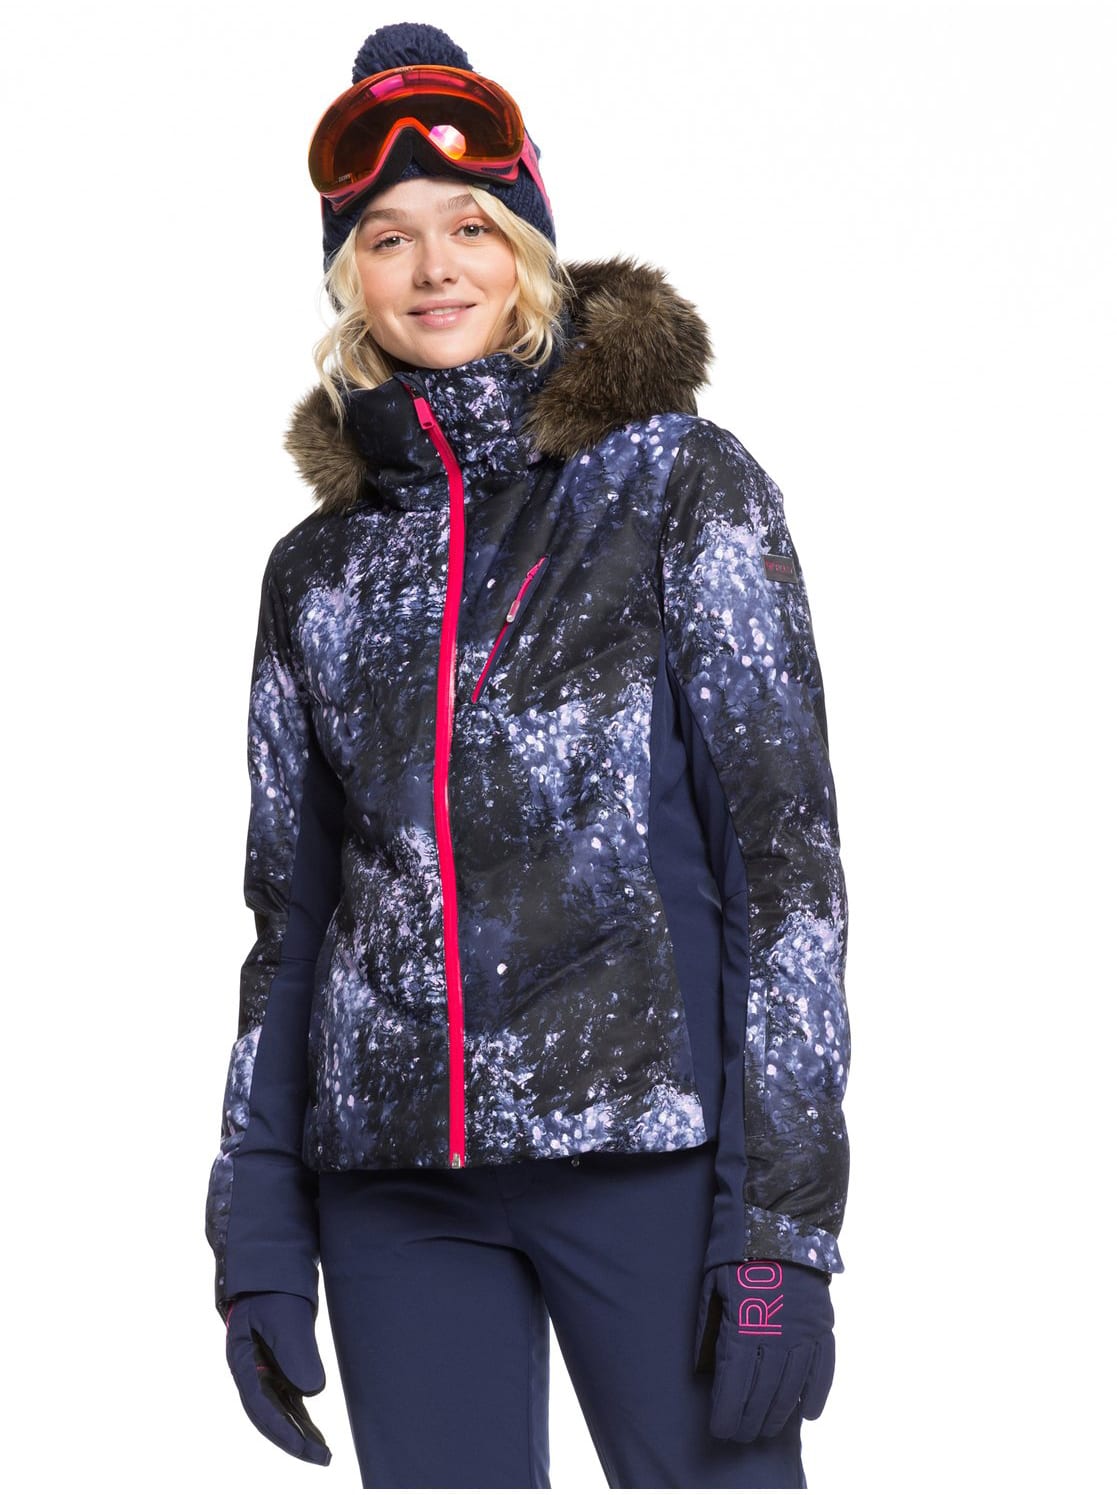 Roxy Jacket Snowstorm at model | hot Sale Hot Snowboard Plus sale glamor Womens